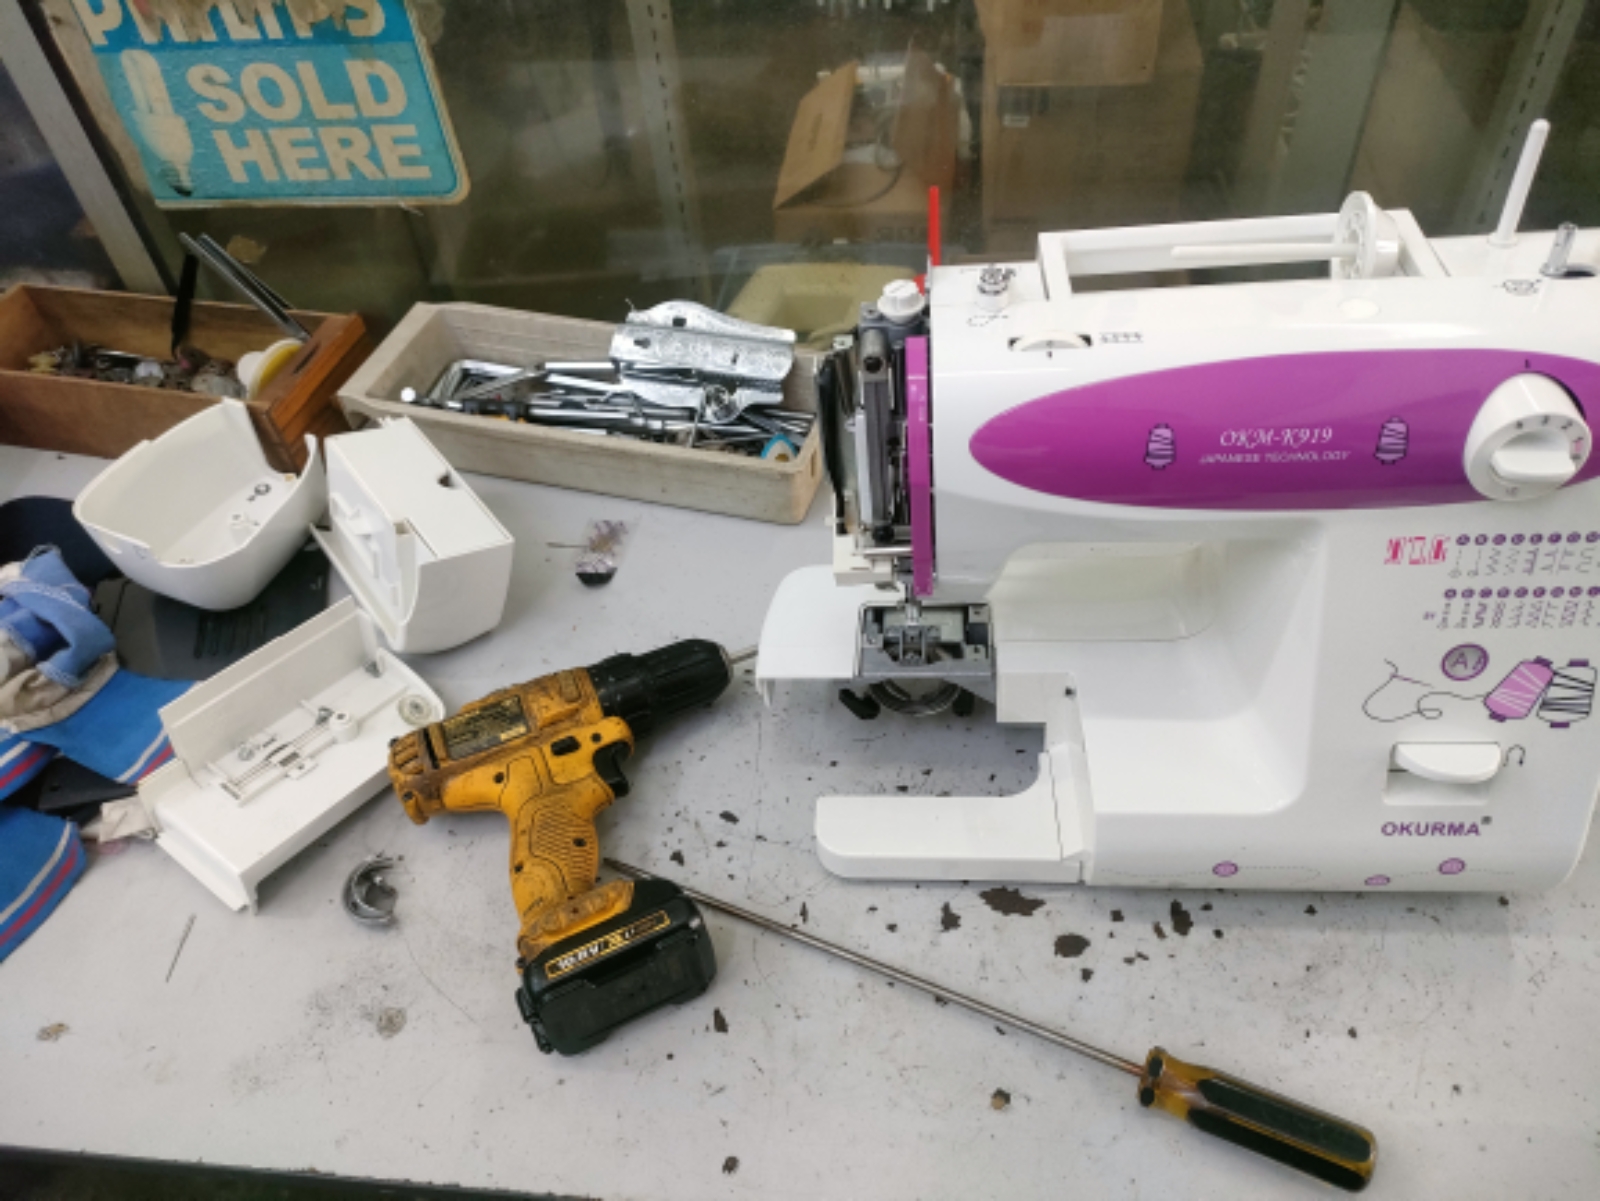 Job Repair Sevis For Brand Okurma Portable Sewing Machine